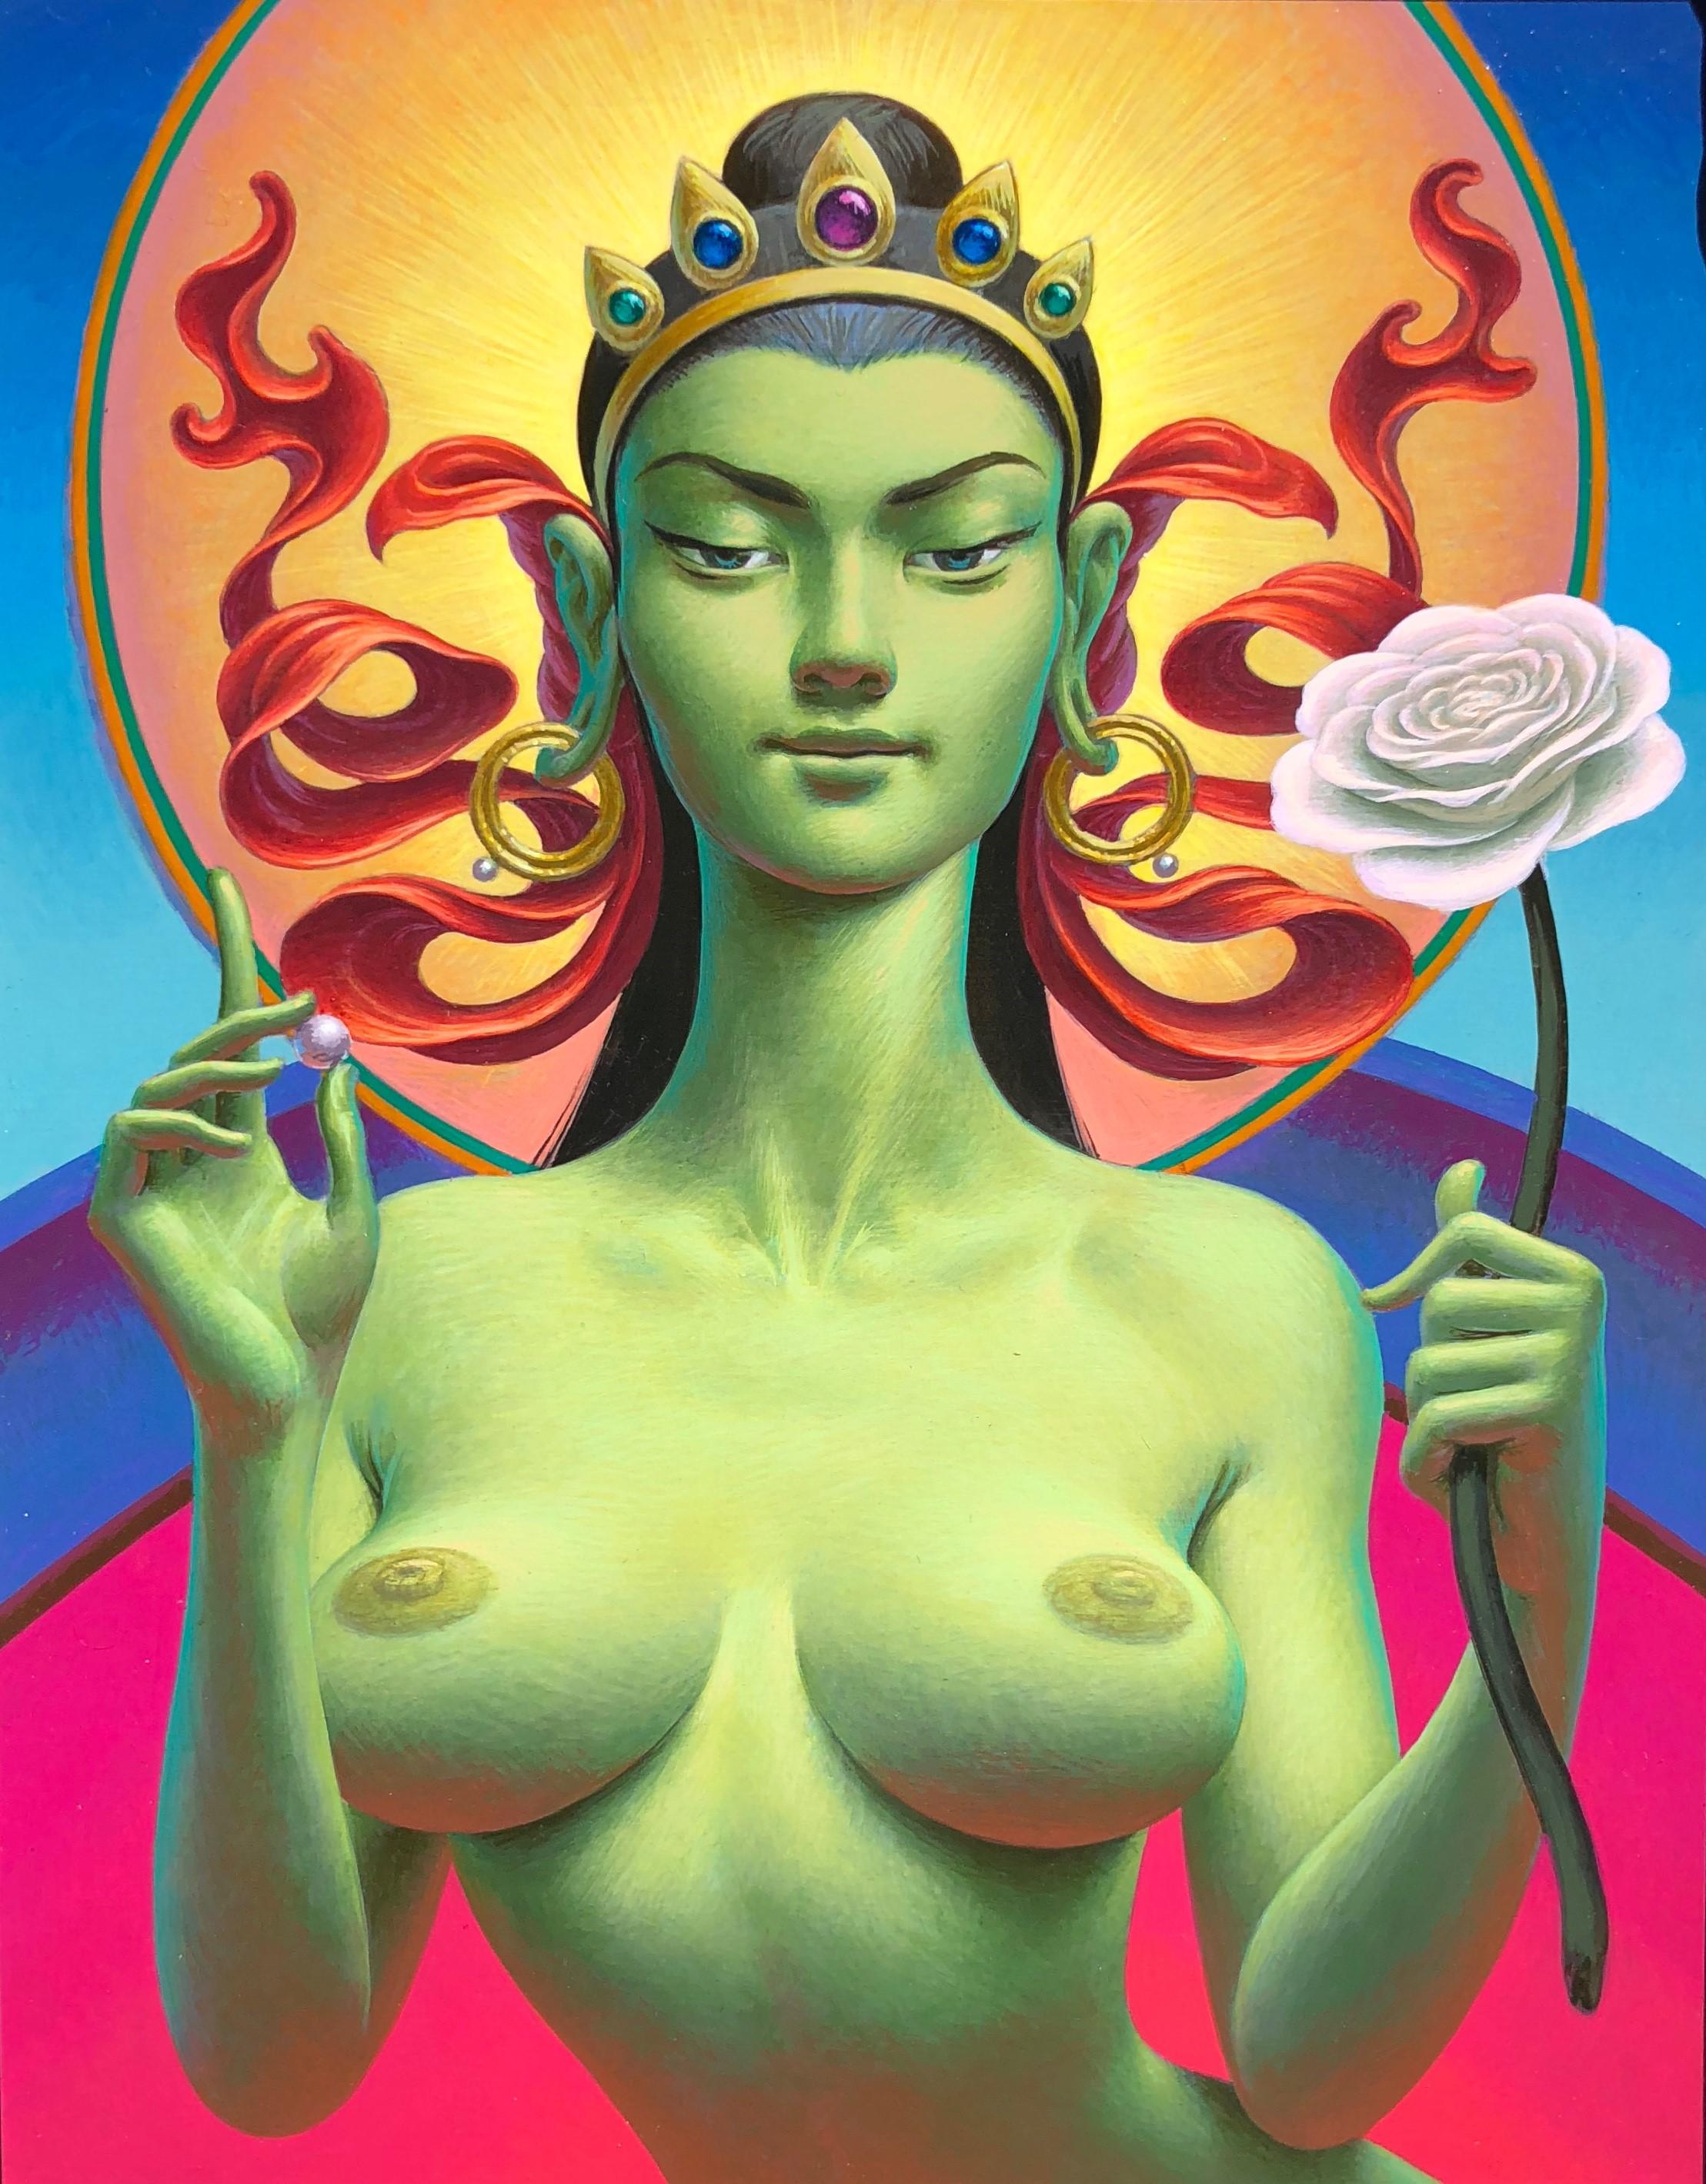 Tara - Highly Detailed Erotic, Symbolic, Surreal Painting - Woman, Pearl, Flower